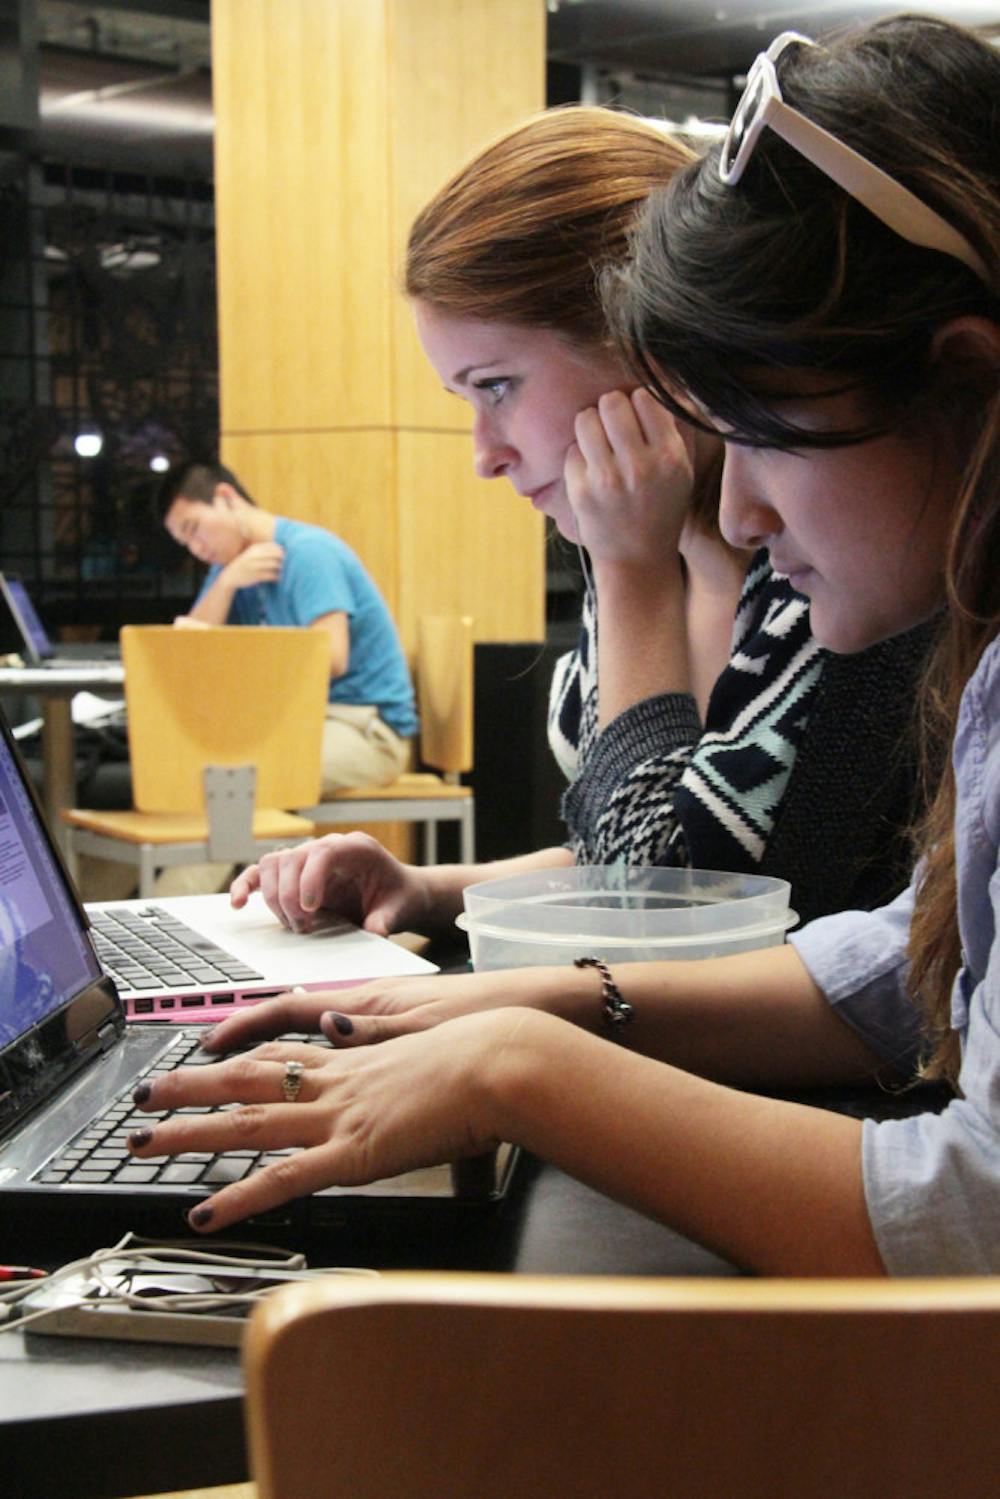 <p>UF advertising juniors Katy Whitehurst, 20, and Ria Burgos, 20, study at Library West on Sunday night.</p>